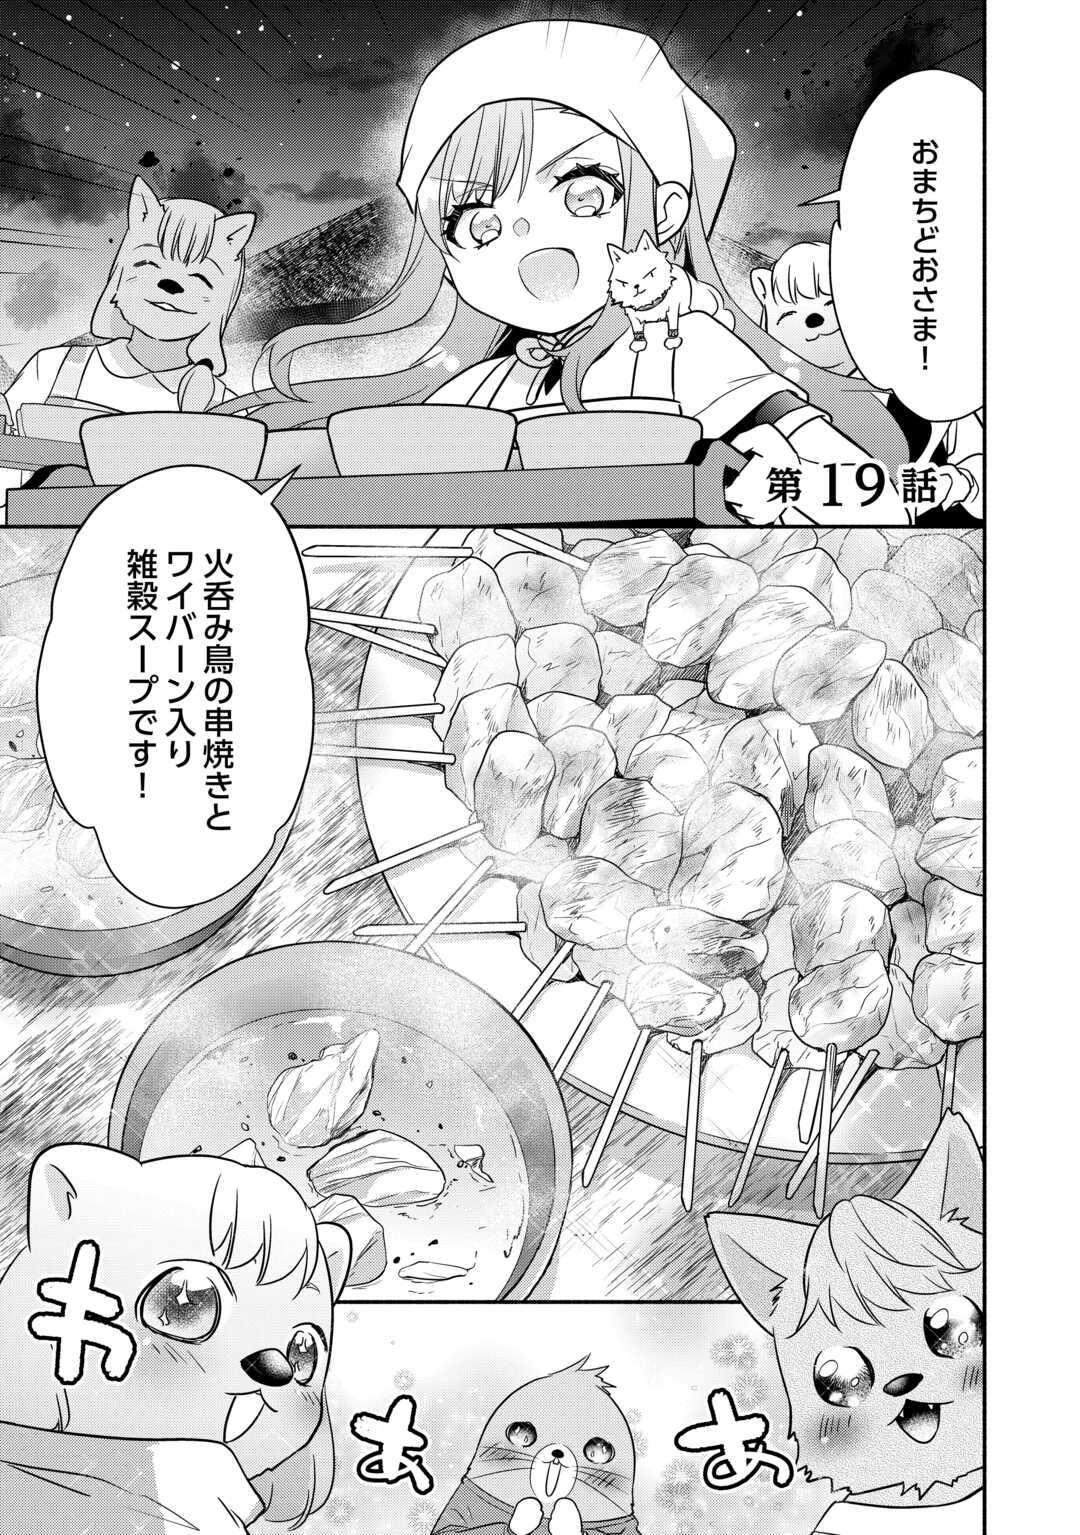 Tensei Youjo. Kamikemono to Ouji to, Saikyou no Ojisan Youhei-dan no Naka de Ikiru. - Chapter 19 - Page 1